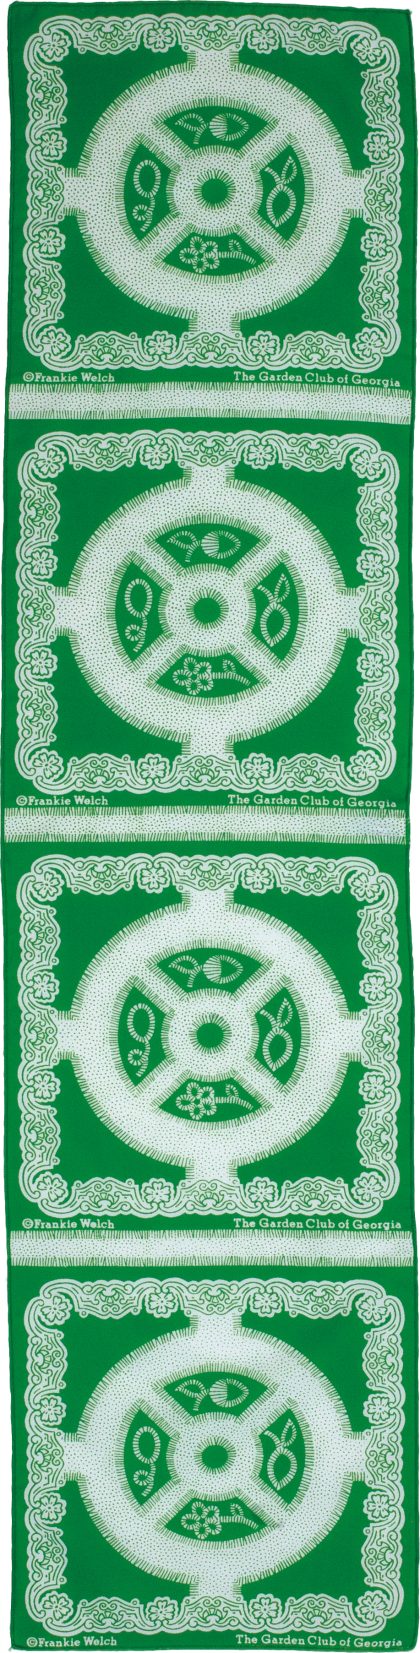 Frankie Welch Garden Club of Georgia scarf, 1978, polyester